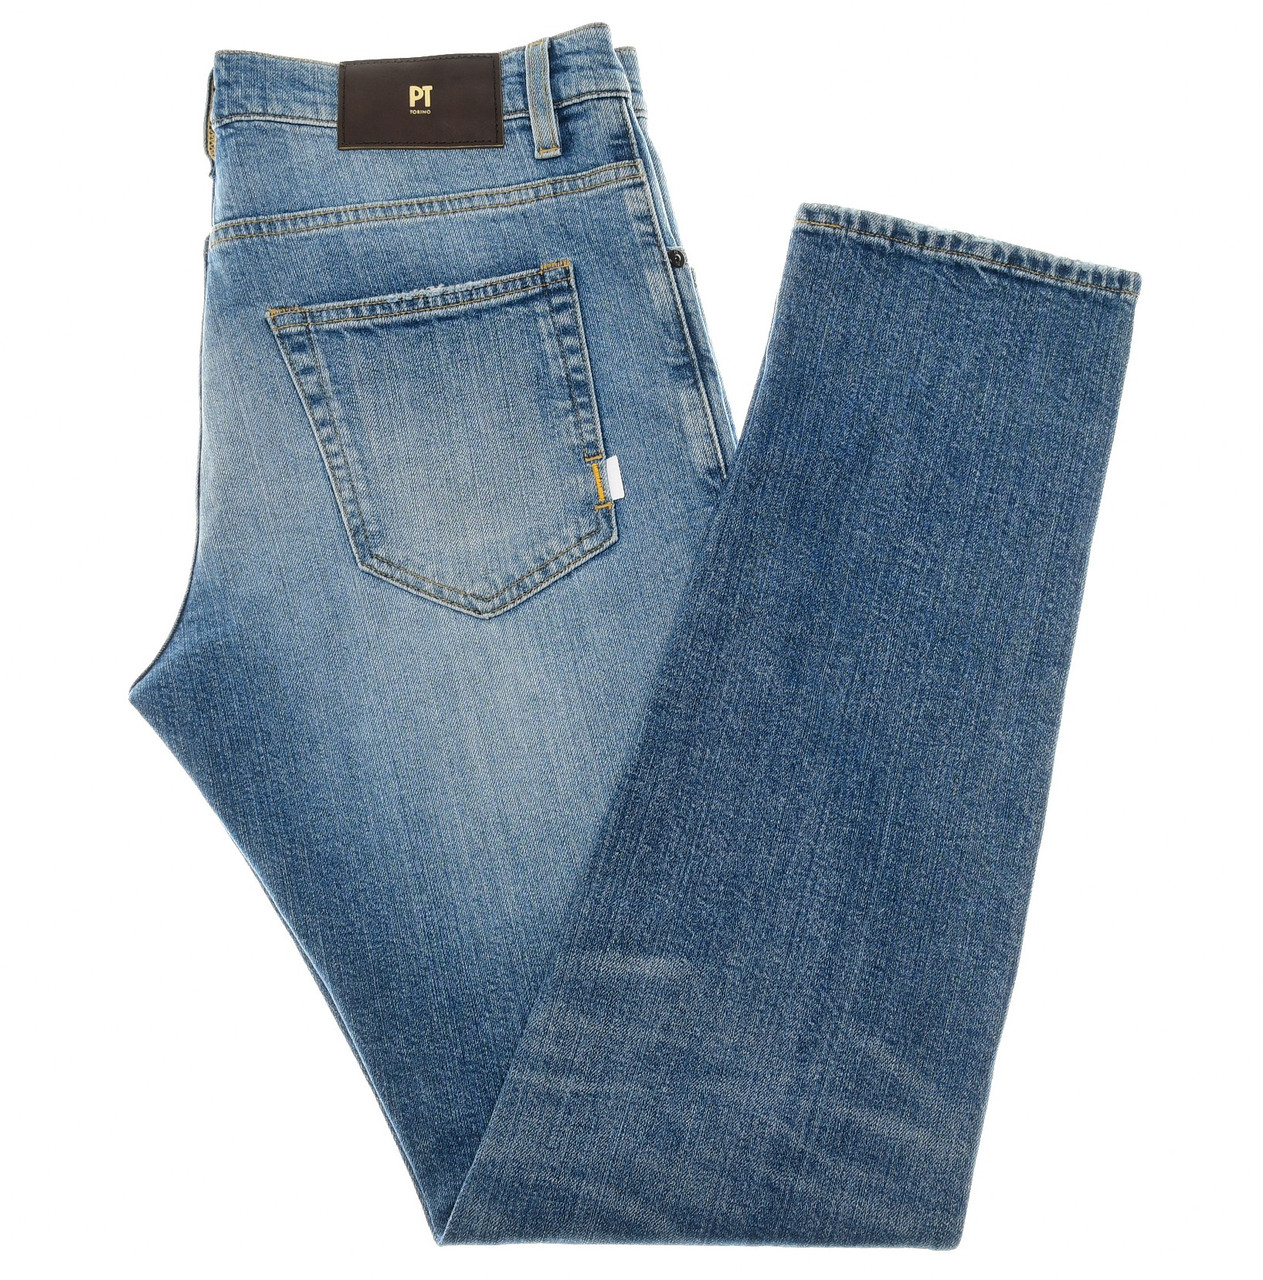 PT Torino Dub Jeans Stretch Denim Selvedge Blue